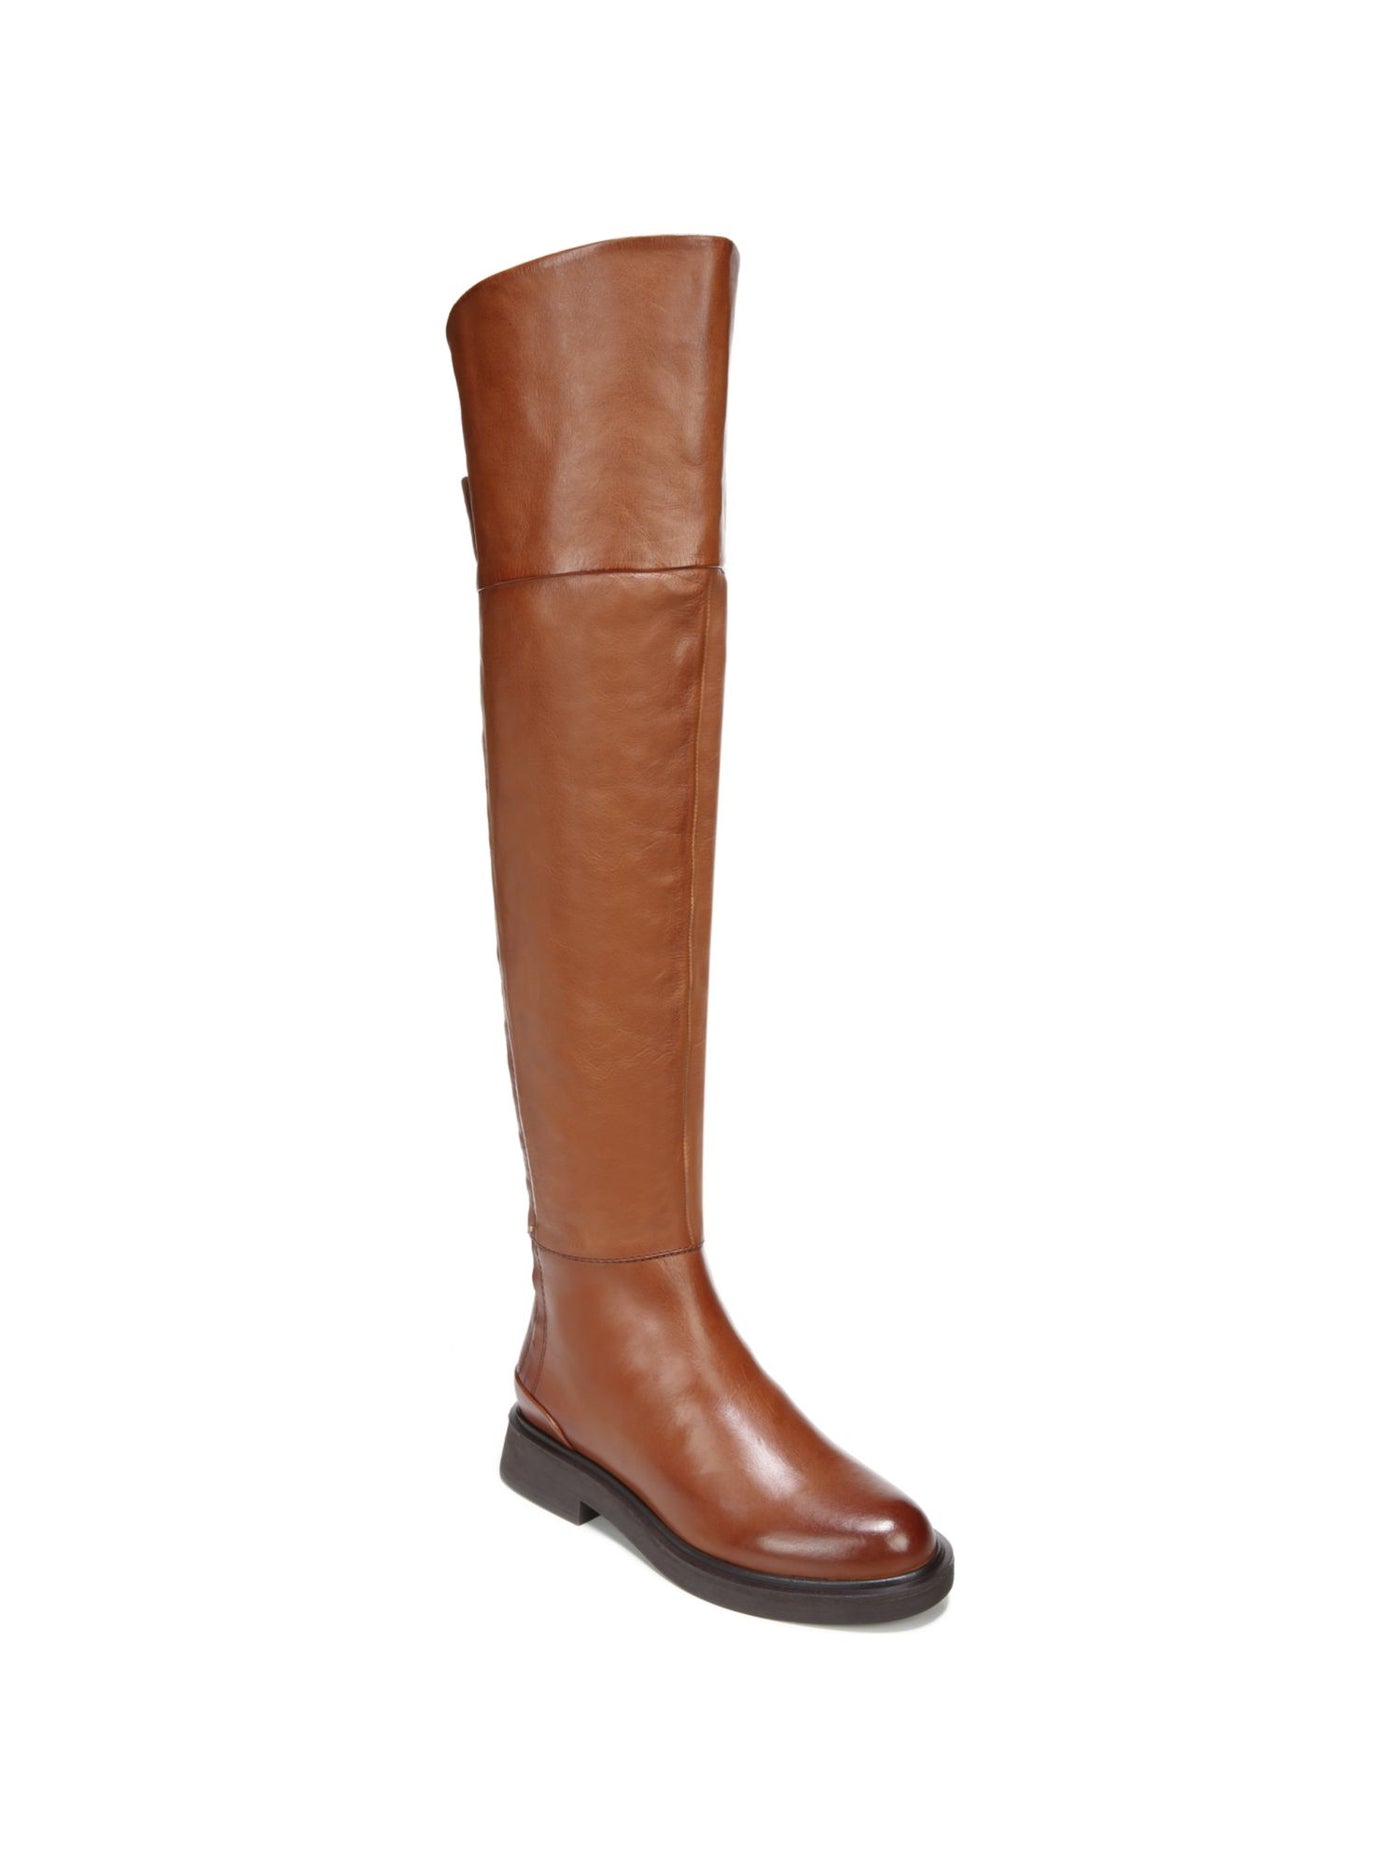 FRANCO SARTO Womens Brown Cushioned Battina Round Toe Block Heel Zip-Up Leather Riding Boot 6.5 M